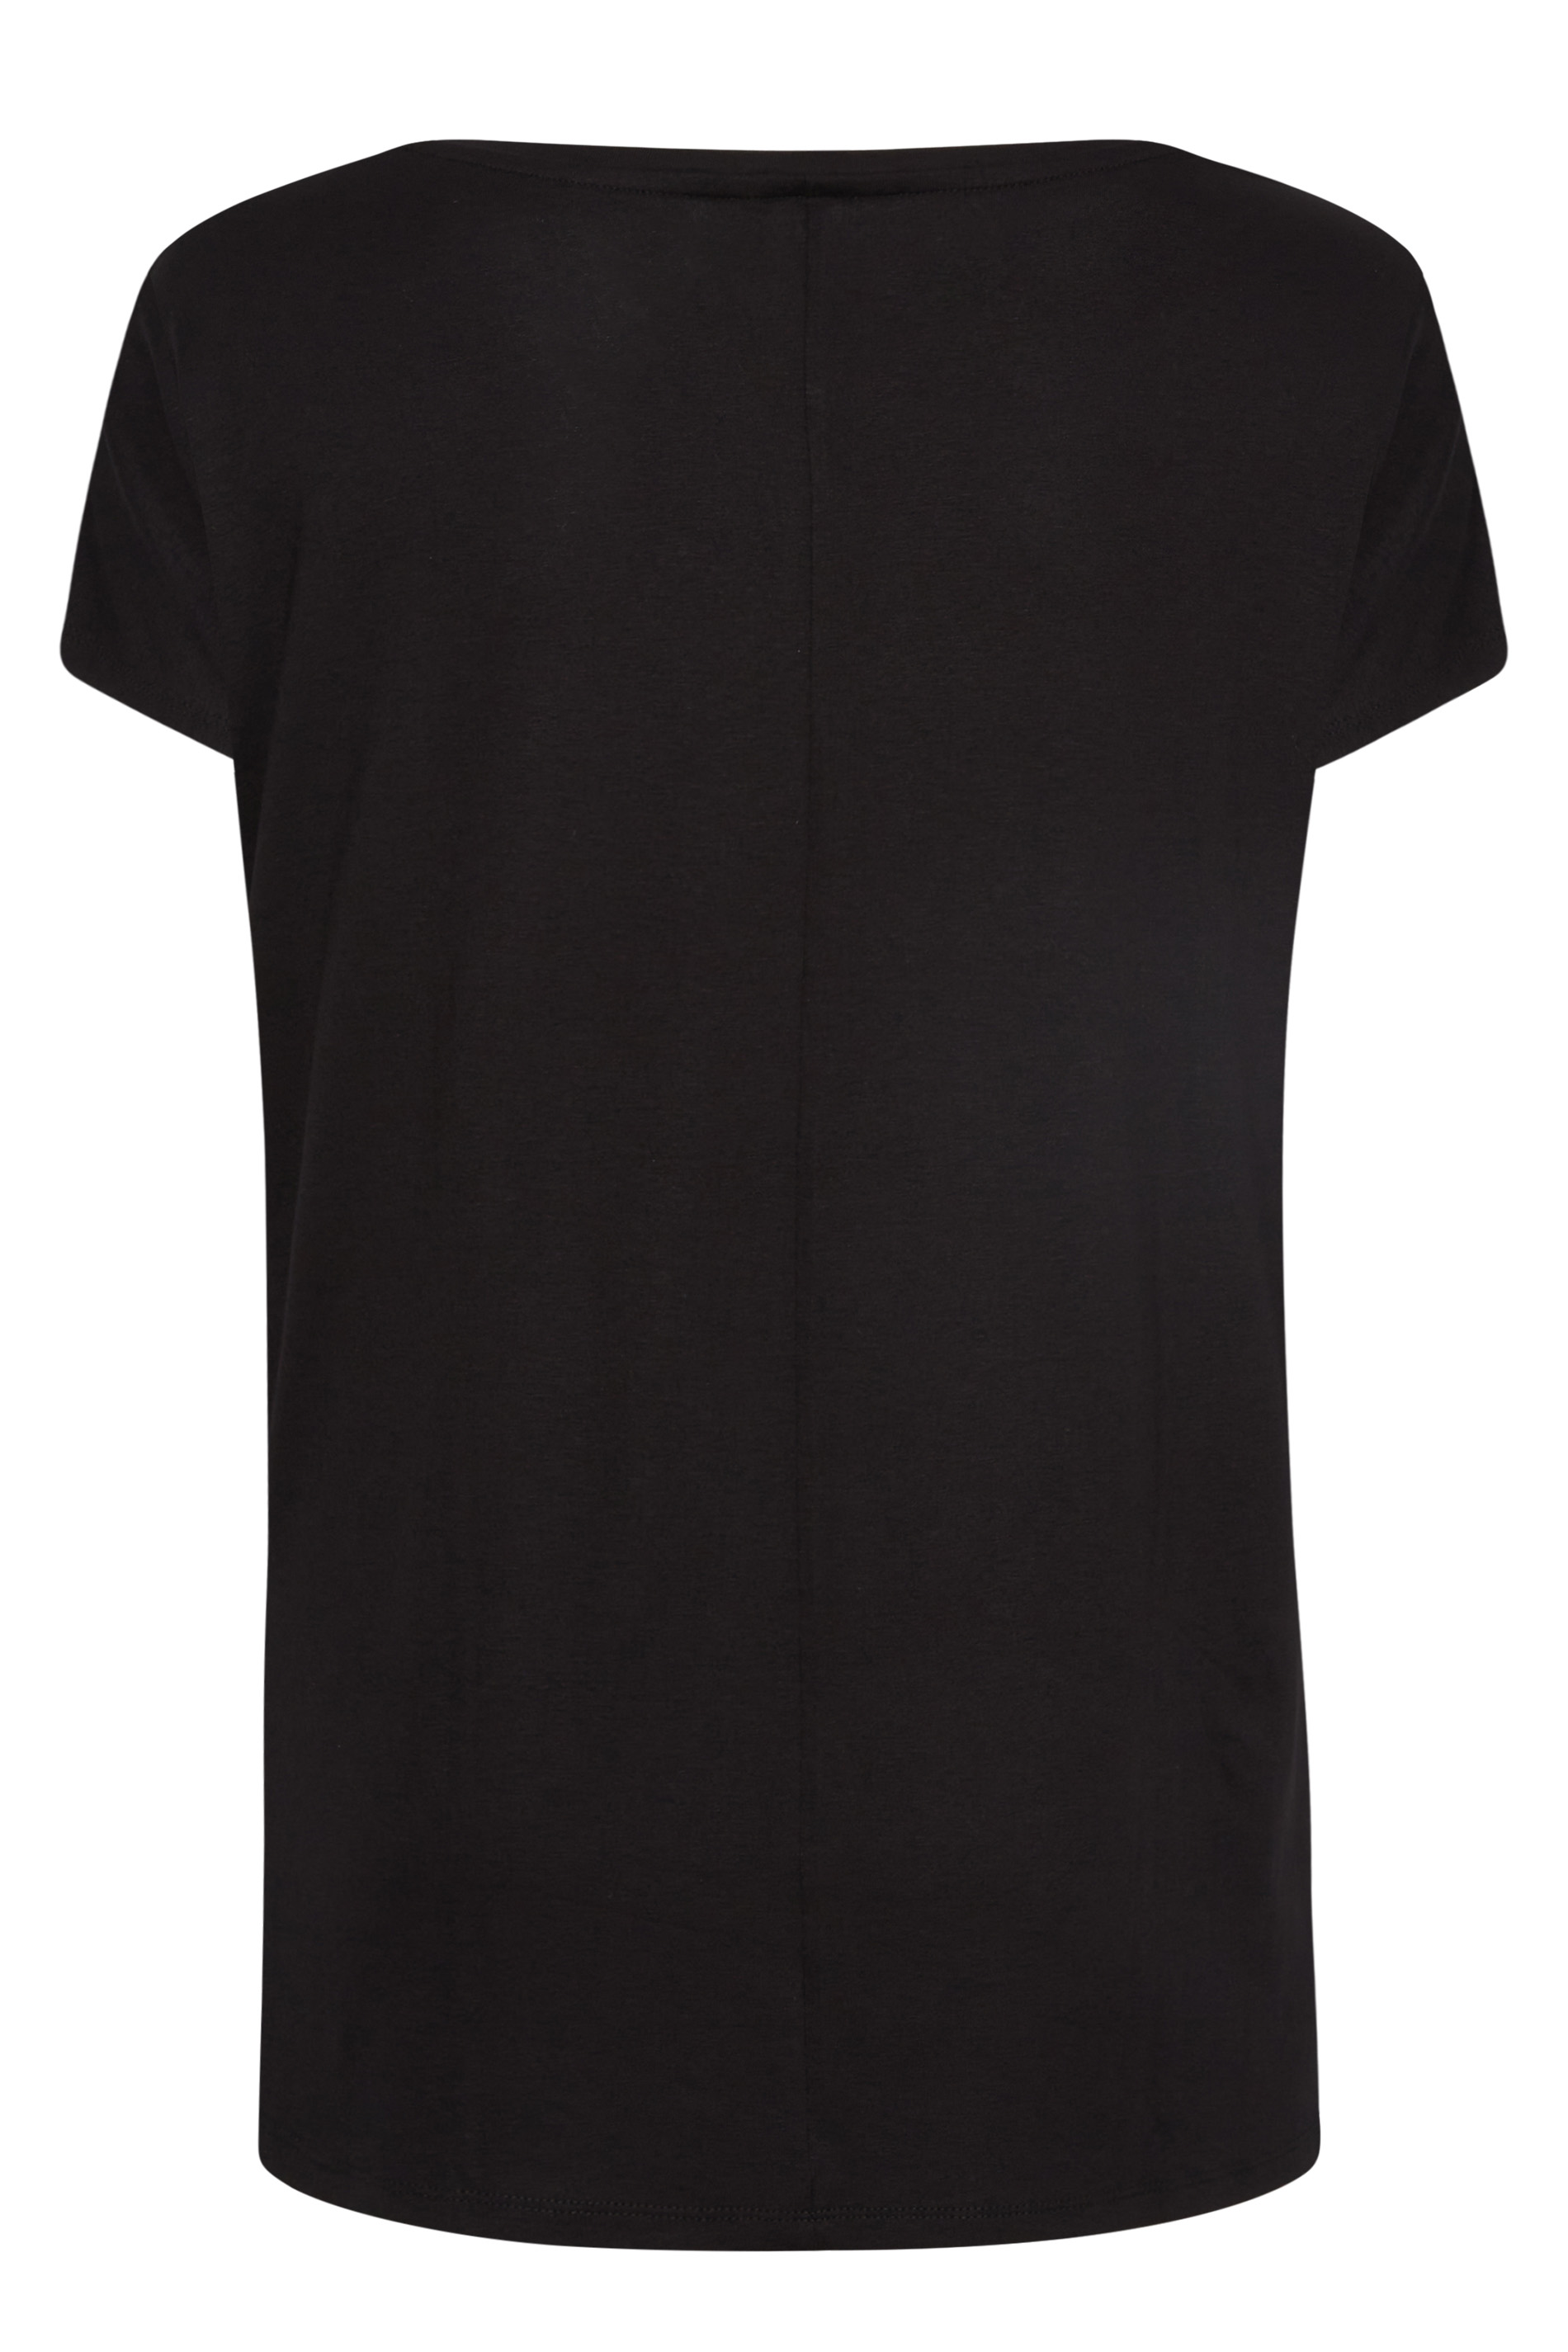 Grande taille  Tops Grande taille  Tops Jersey | T-Shirt Noir Coeurs Léopard en Jersey - VN49387